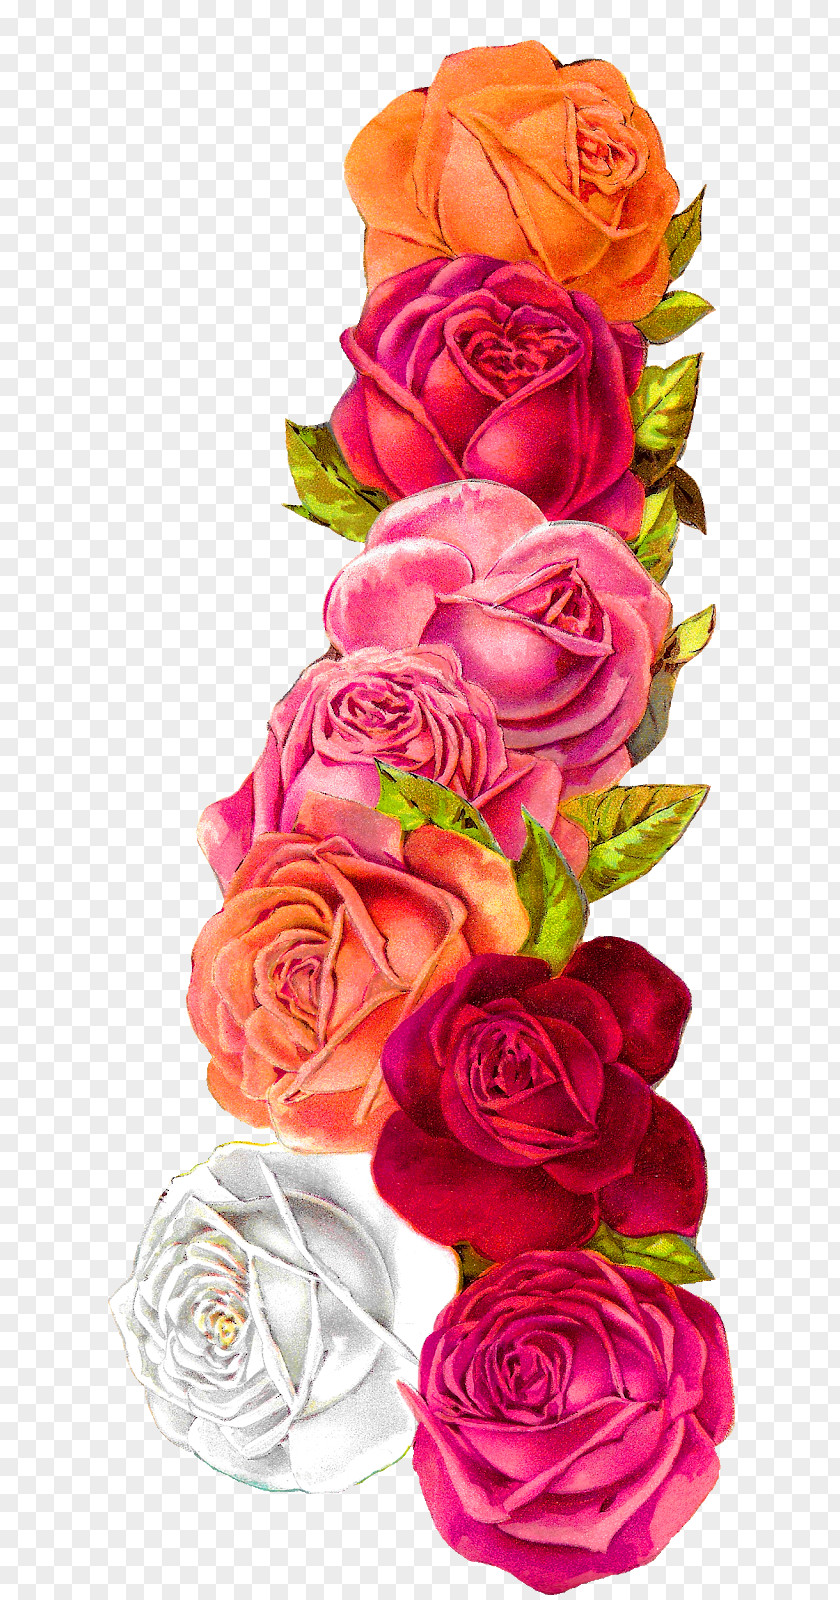 Flower Garden Roses Cabbage Rose Floral Design Shabby Chic Clip Art PNG